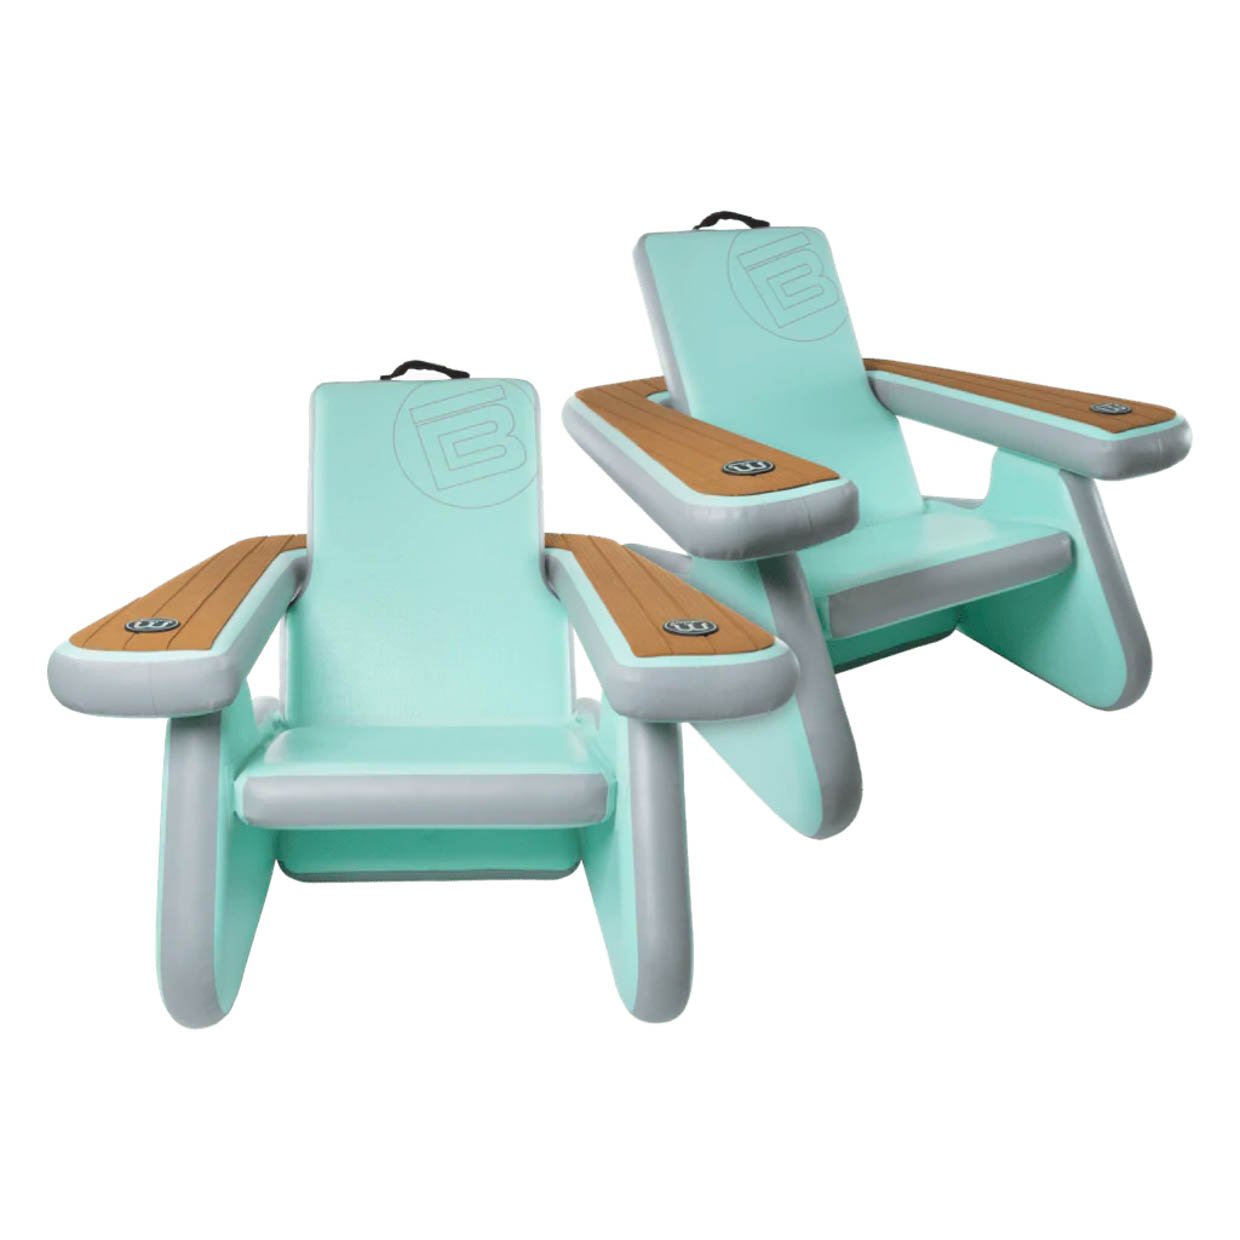 Bote AeroRondak Chair